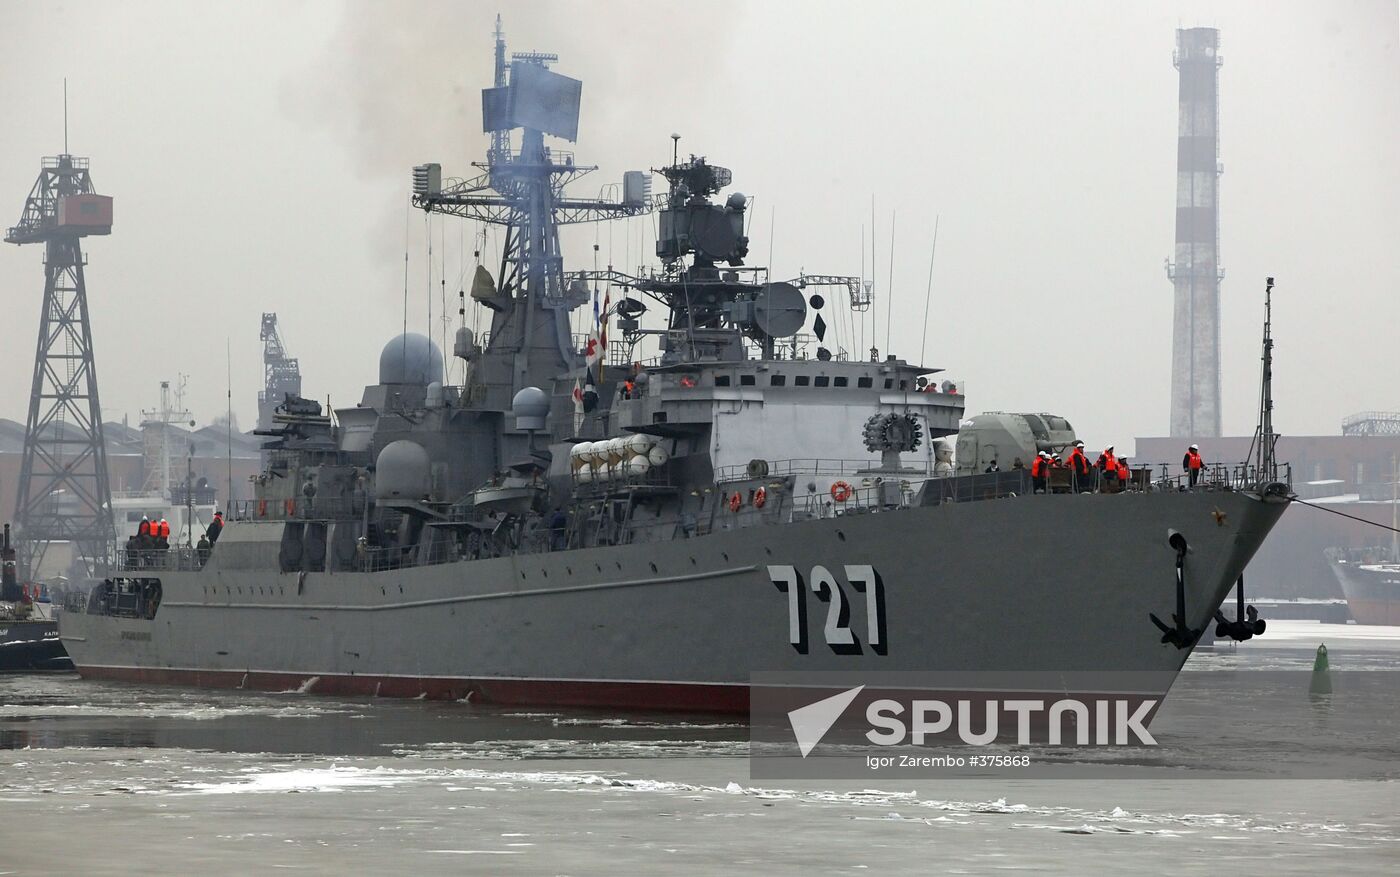 The escort ship Yaroslav Mudry [Wise] leaving on her trial run